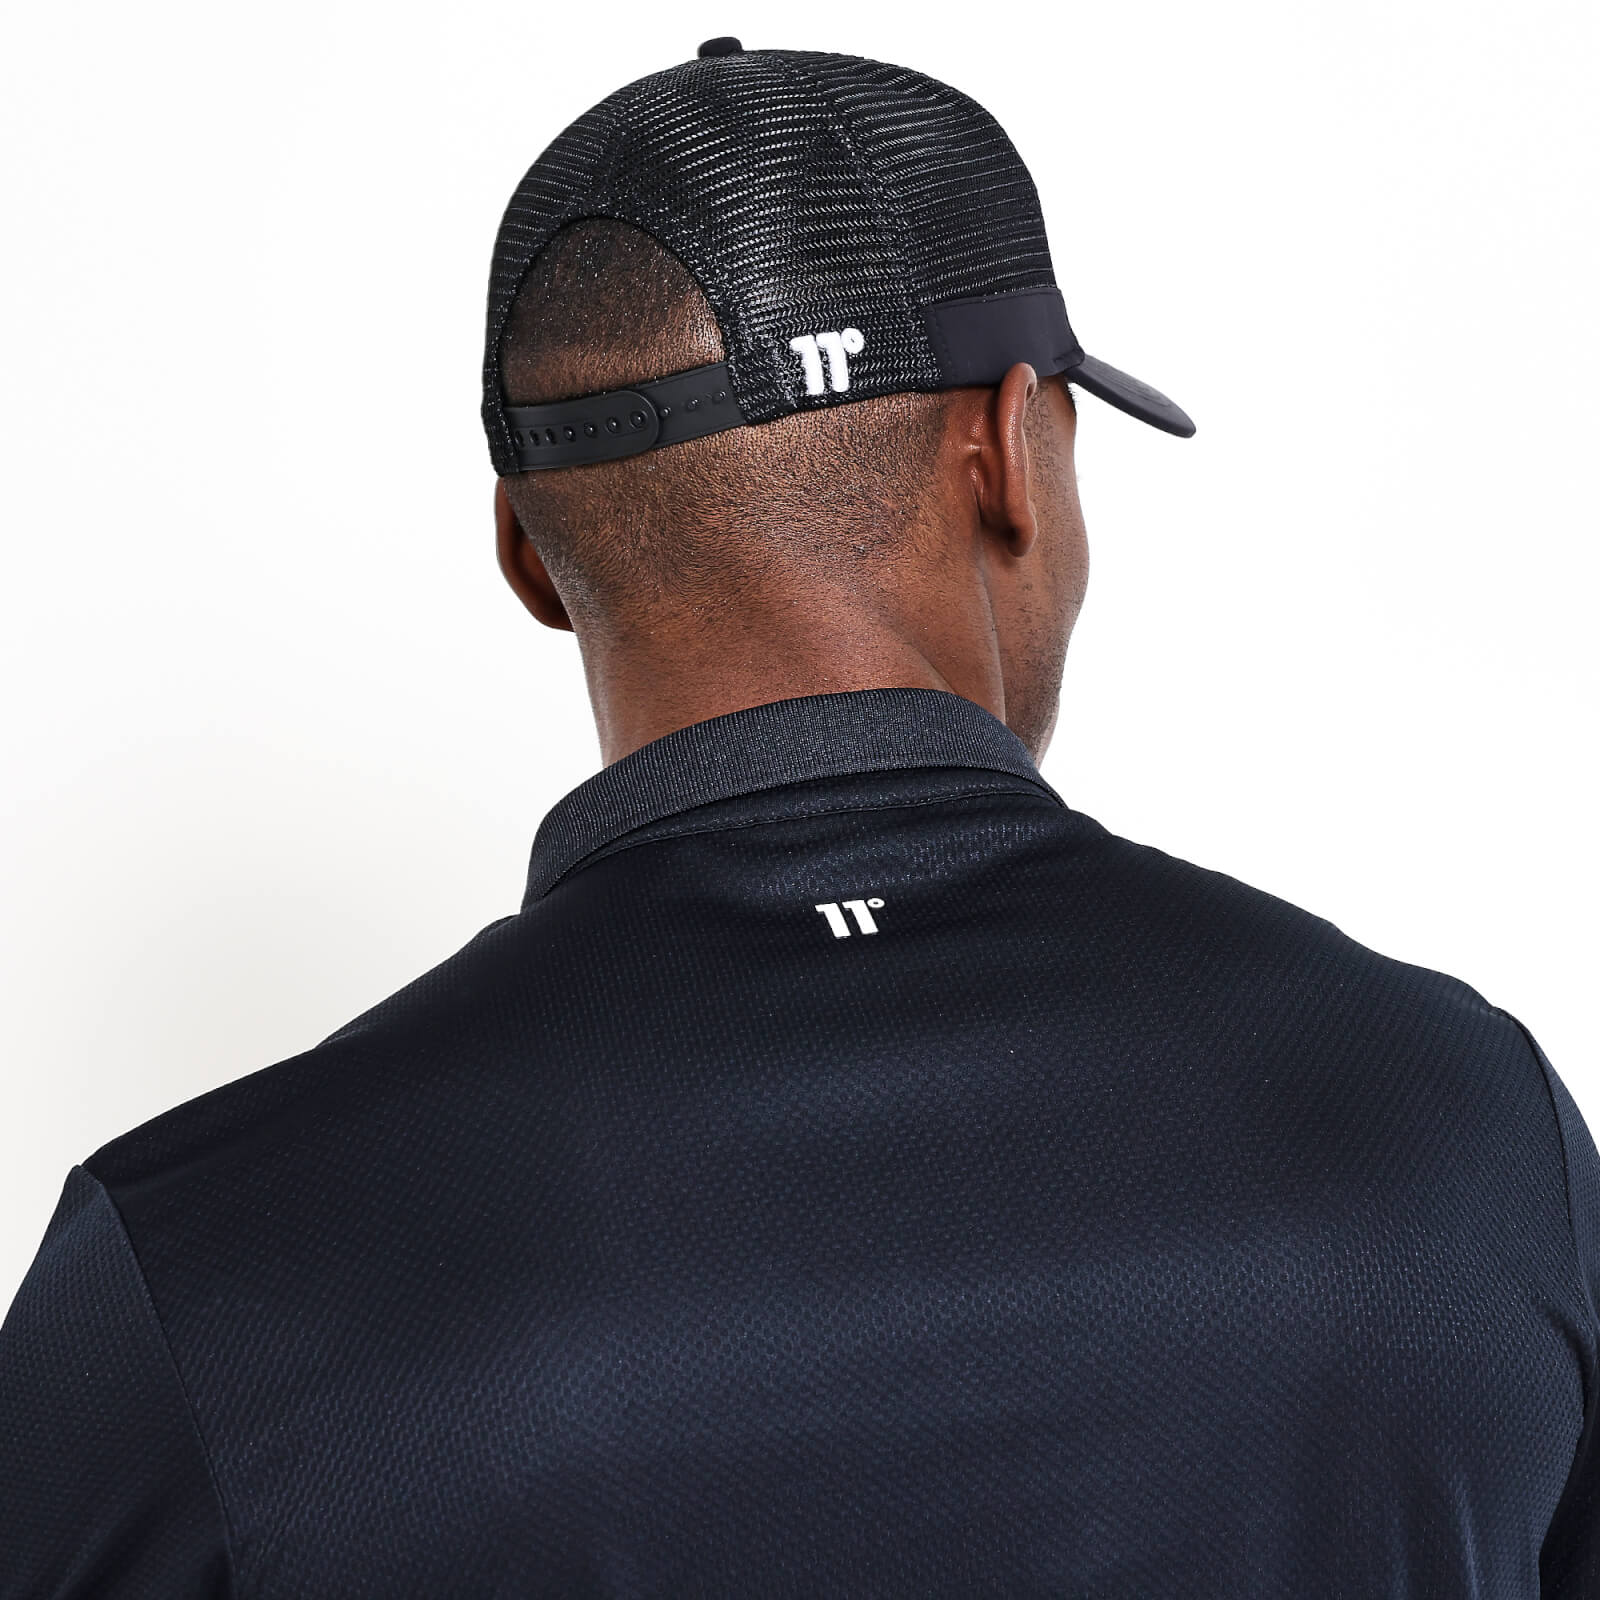 golf cap – black - one size